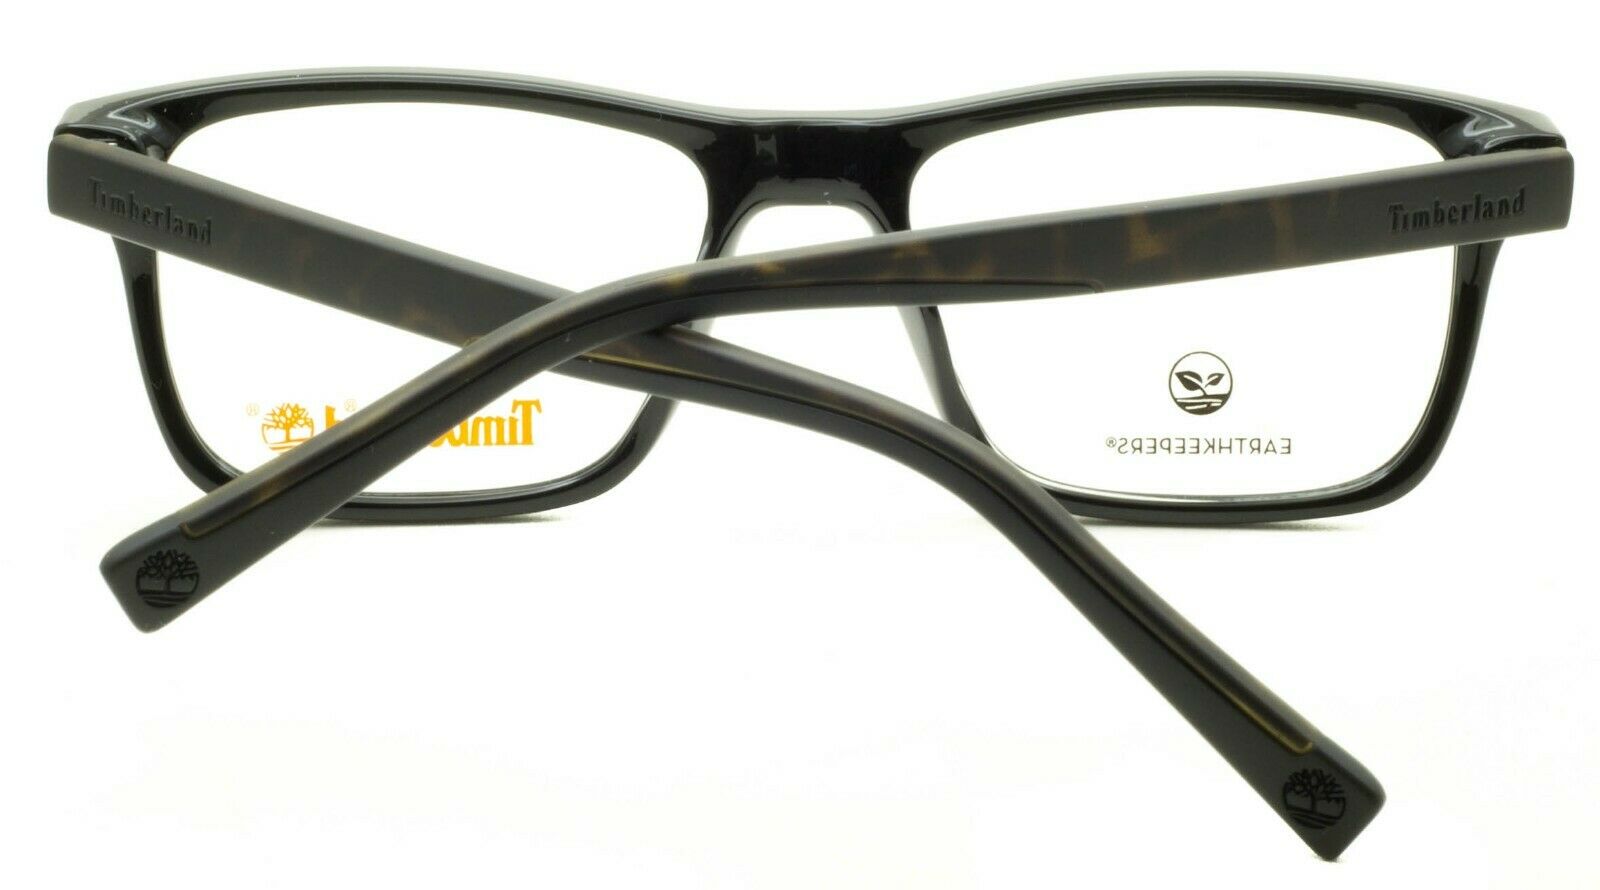 TIMBERLAND TB 1596 001 49mm Eyewear FRAMES Glasses RX Optical Eyeglasses - New